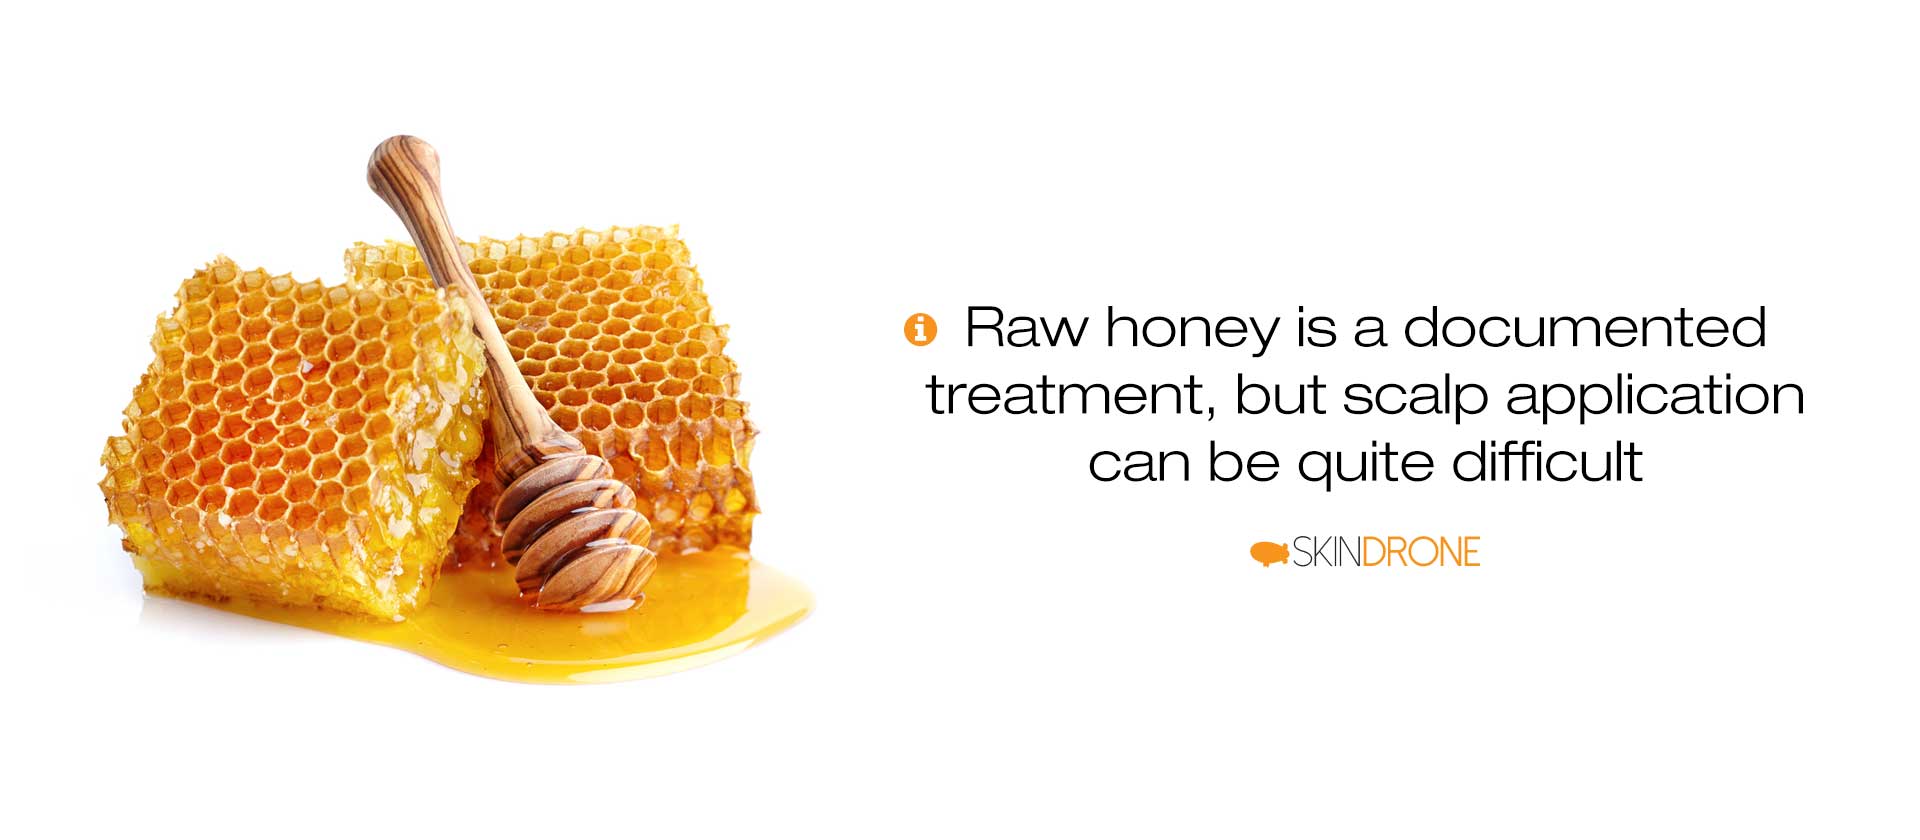 Raw honey has documented effectivness for seborrheic dermatitis, but scalp treatment remains difficult